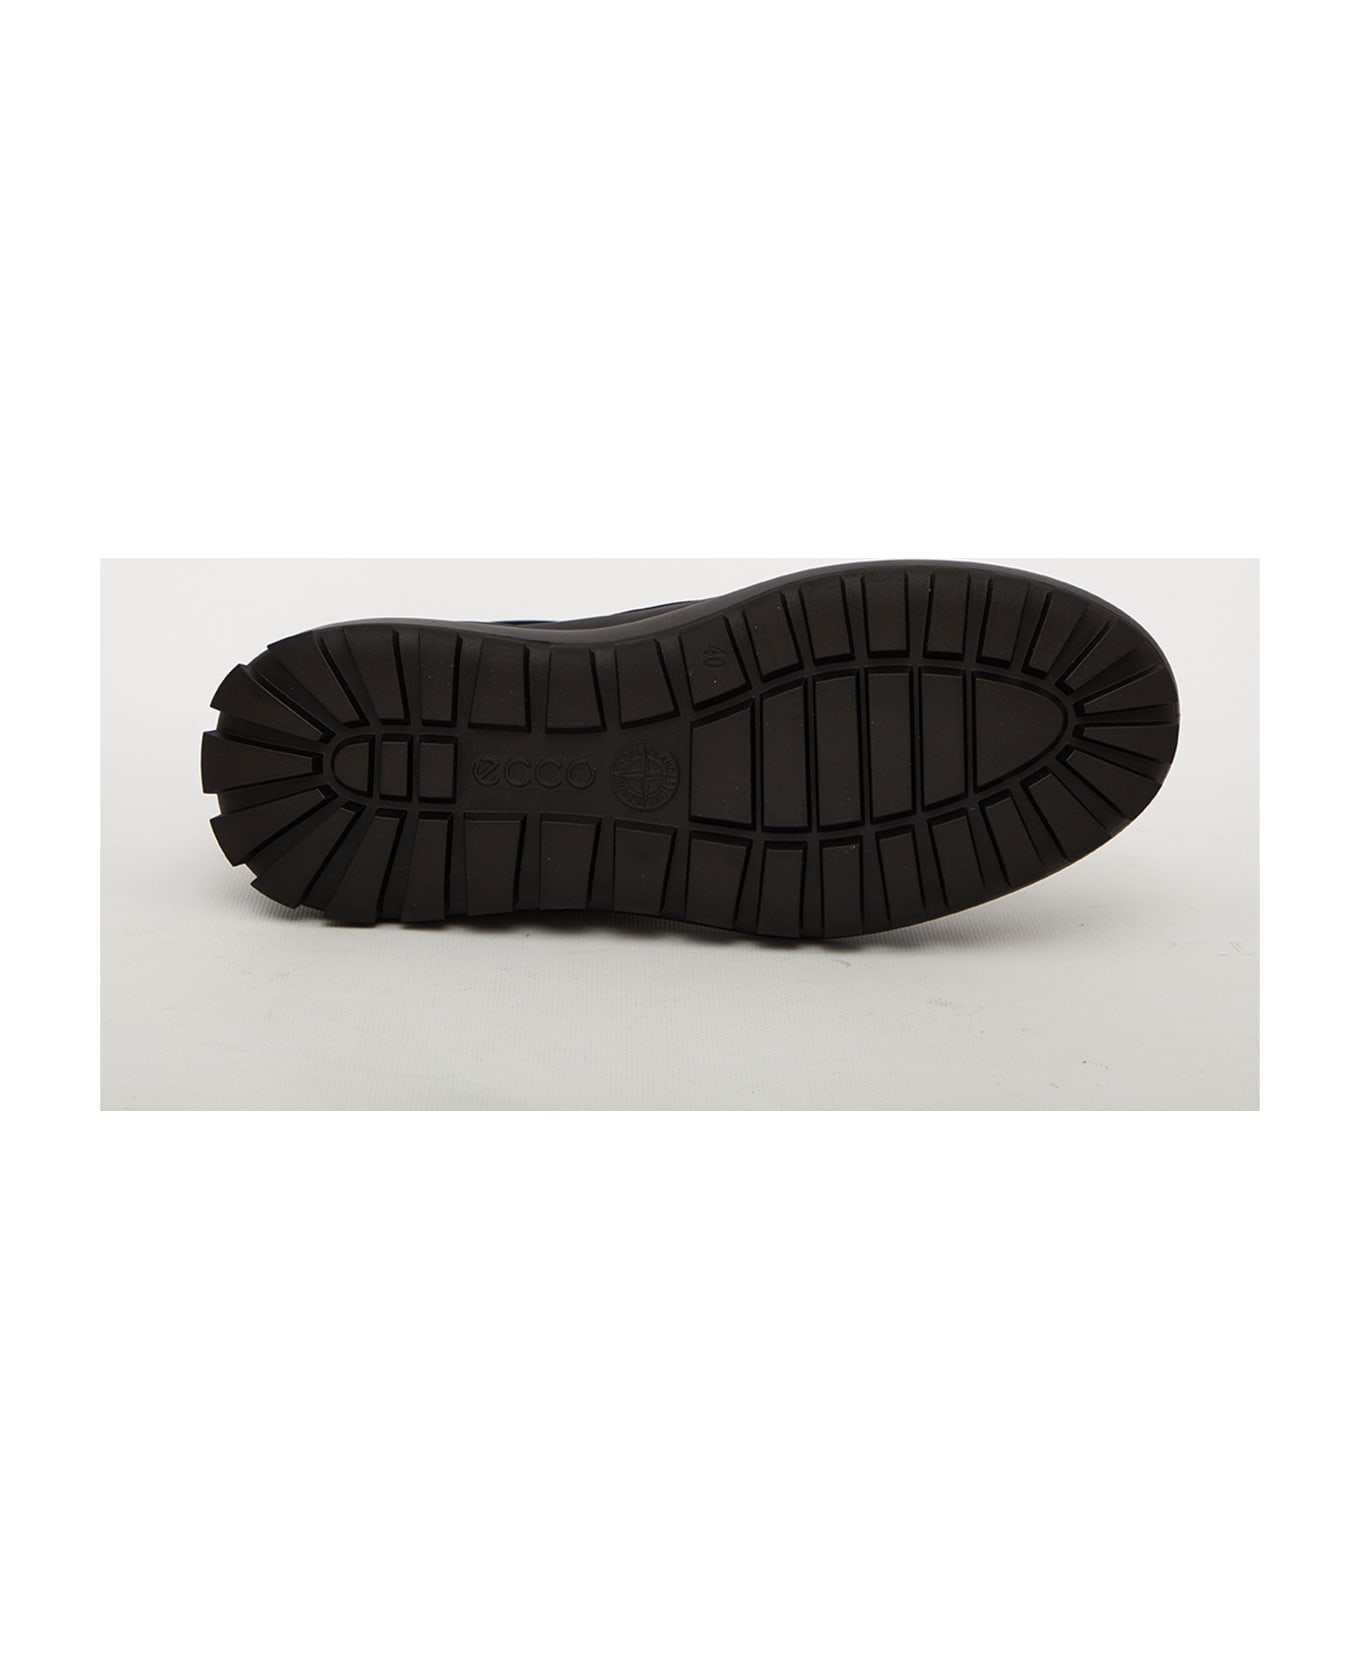 Stone Island Black Leather Boots - Black